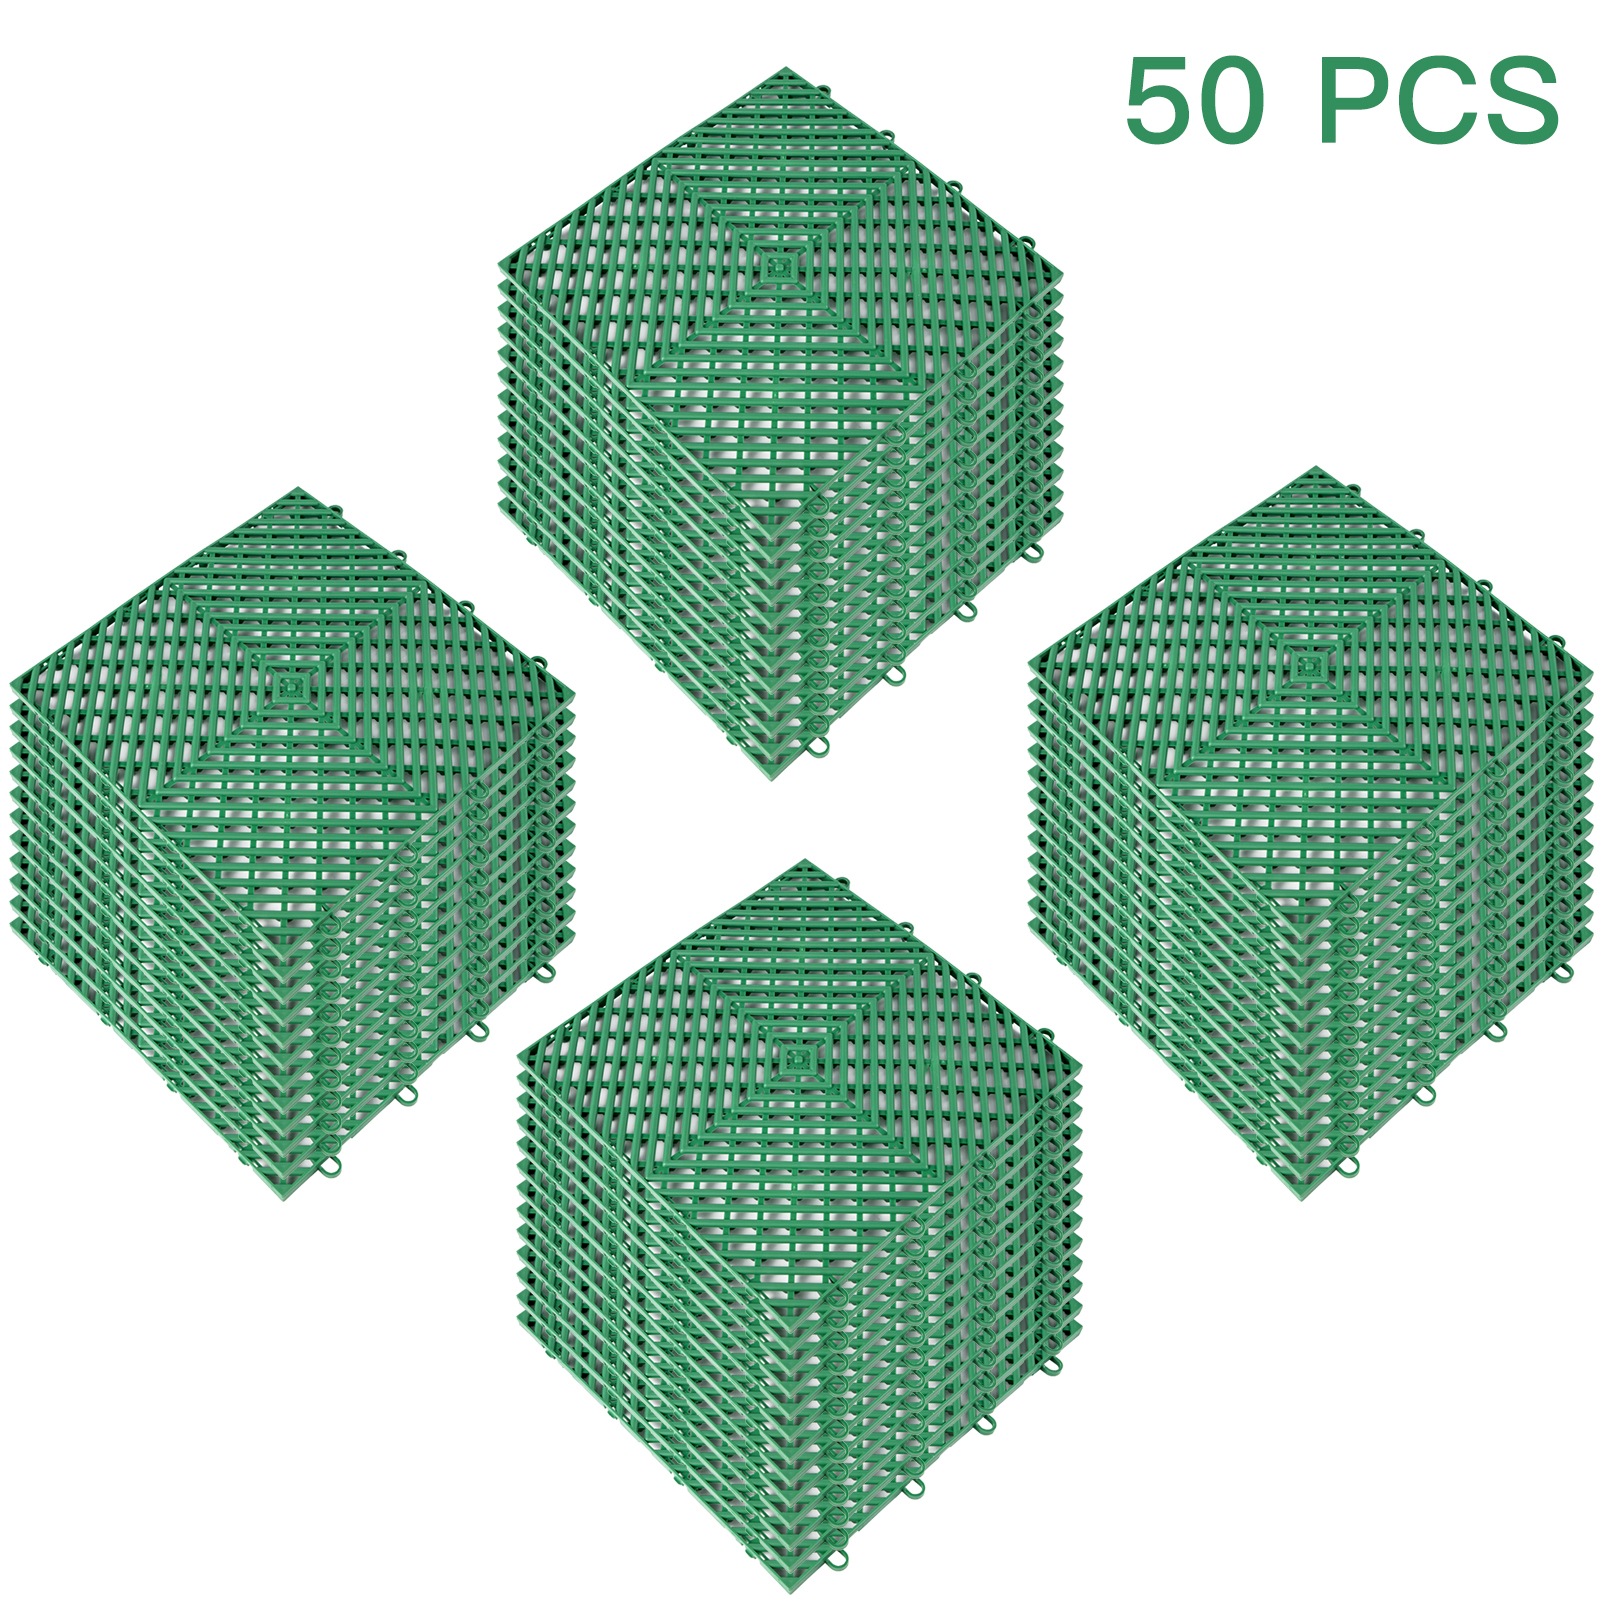 Rubber Tiles Interlocking Garage Floor Tiles 12x12x0.5inch 50pcs Deck Tile Green от Vevor Many GEOs